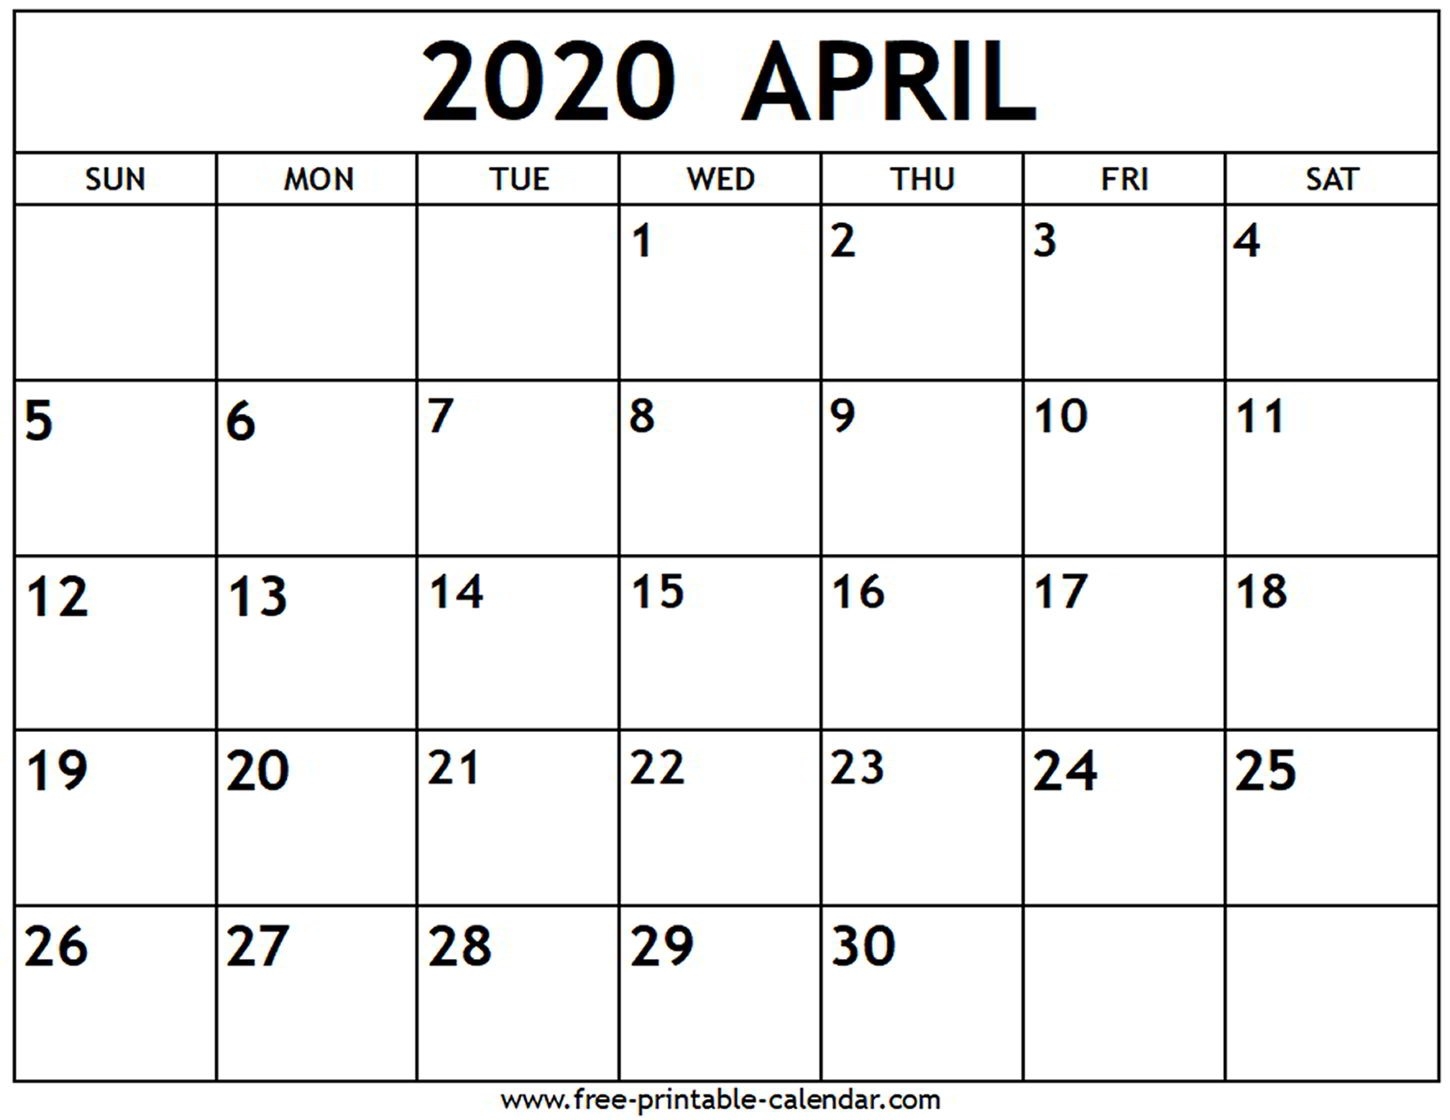 April 2020 Calendar - Free-Printable-Calendar-Blank Calendar Worksheet For April 2020